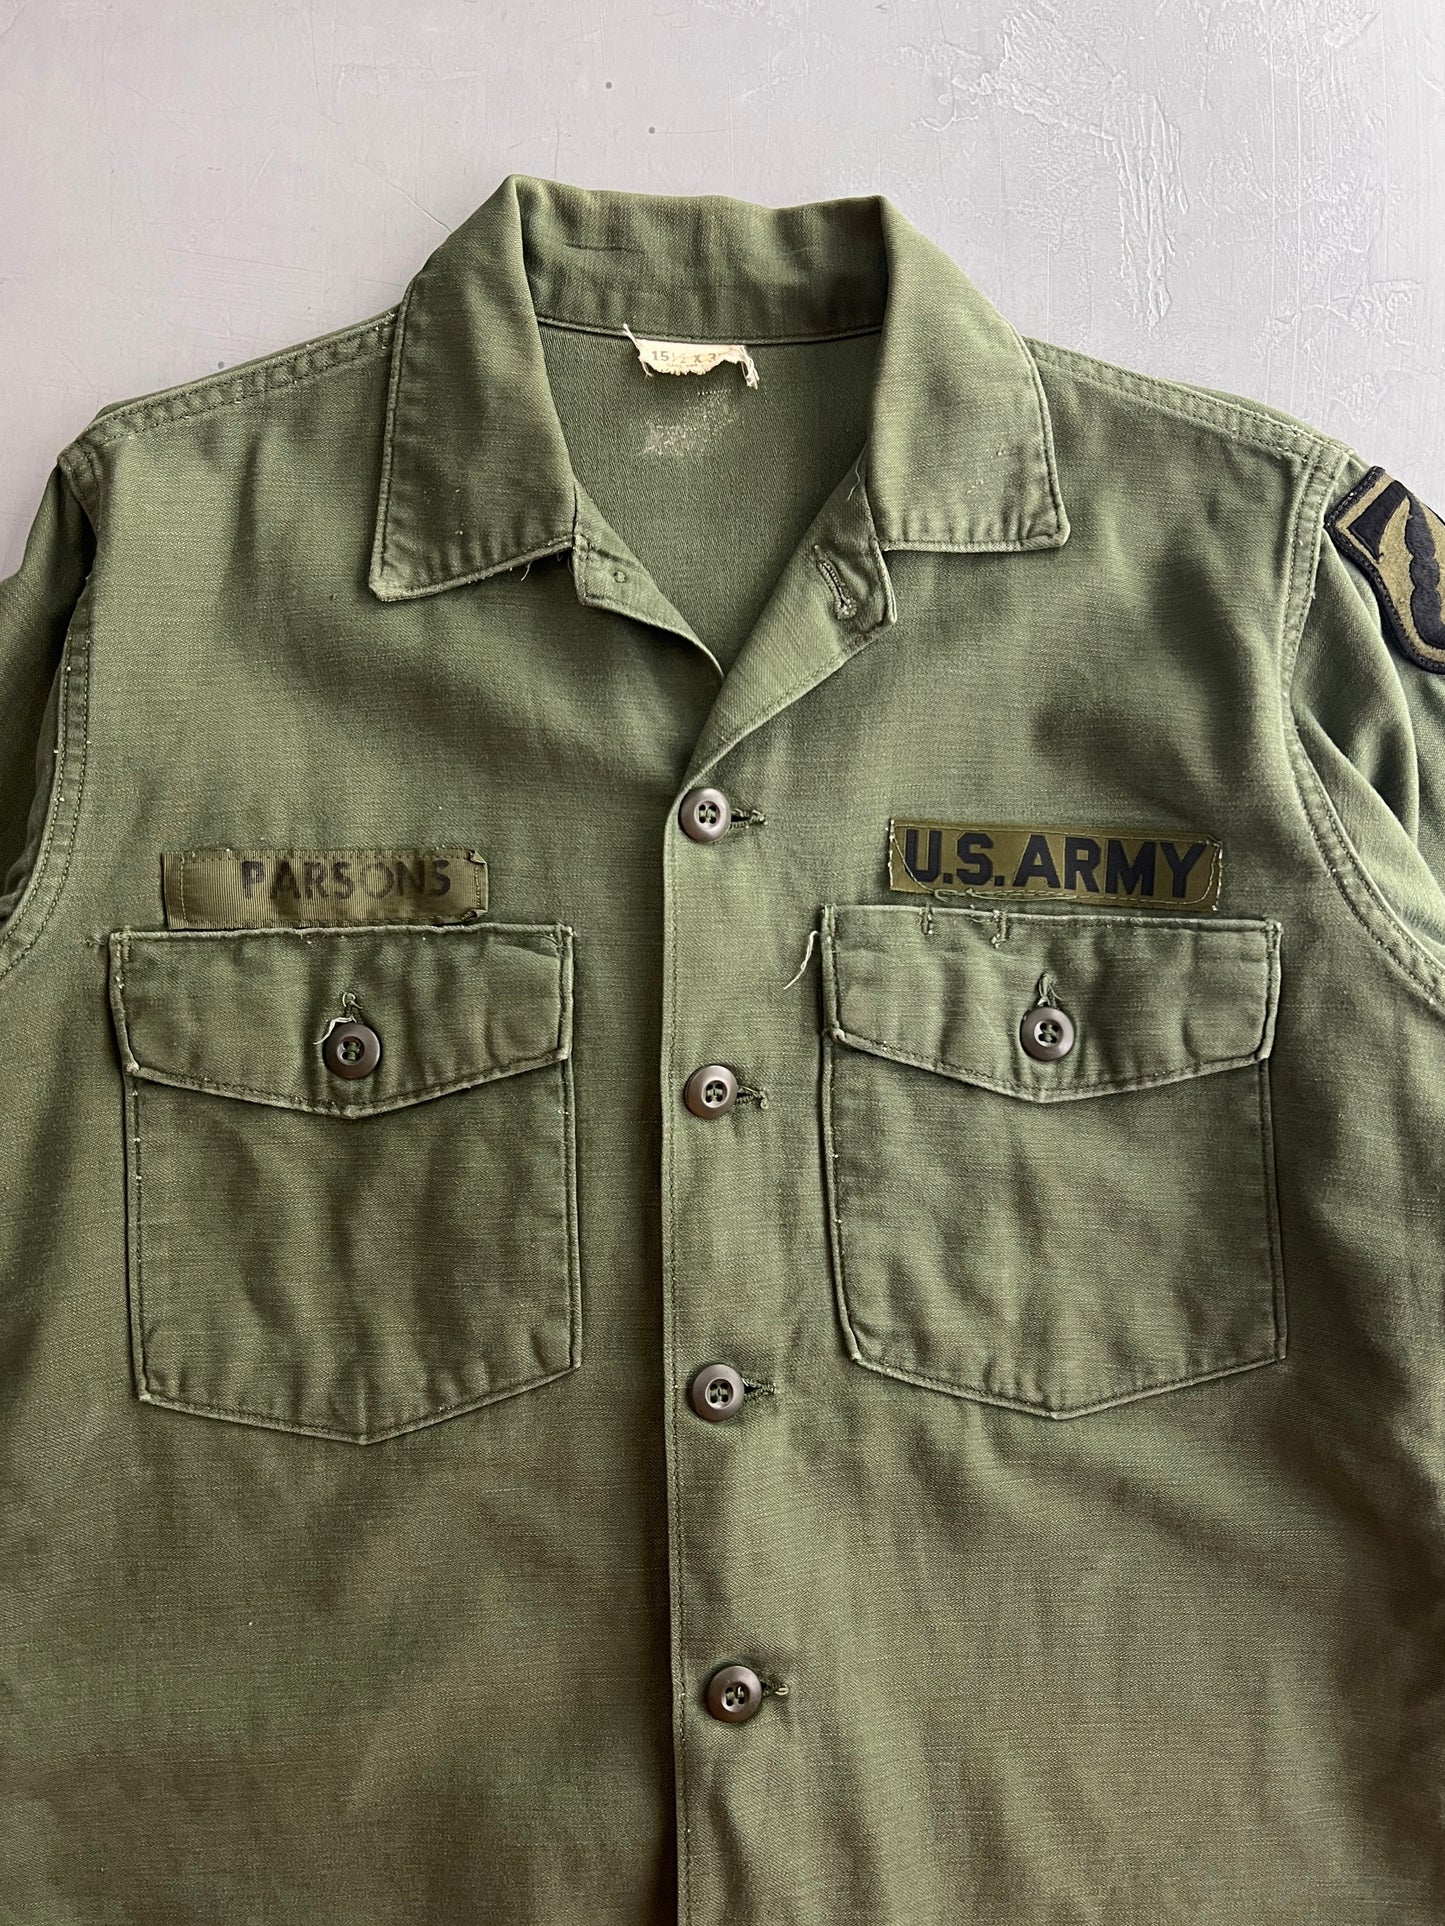 OG-107 US Army Shirt [L]